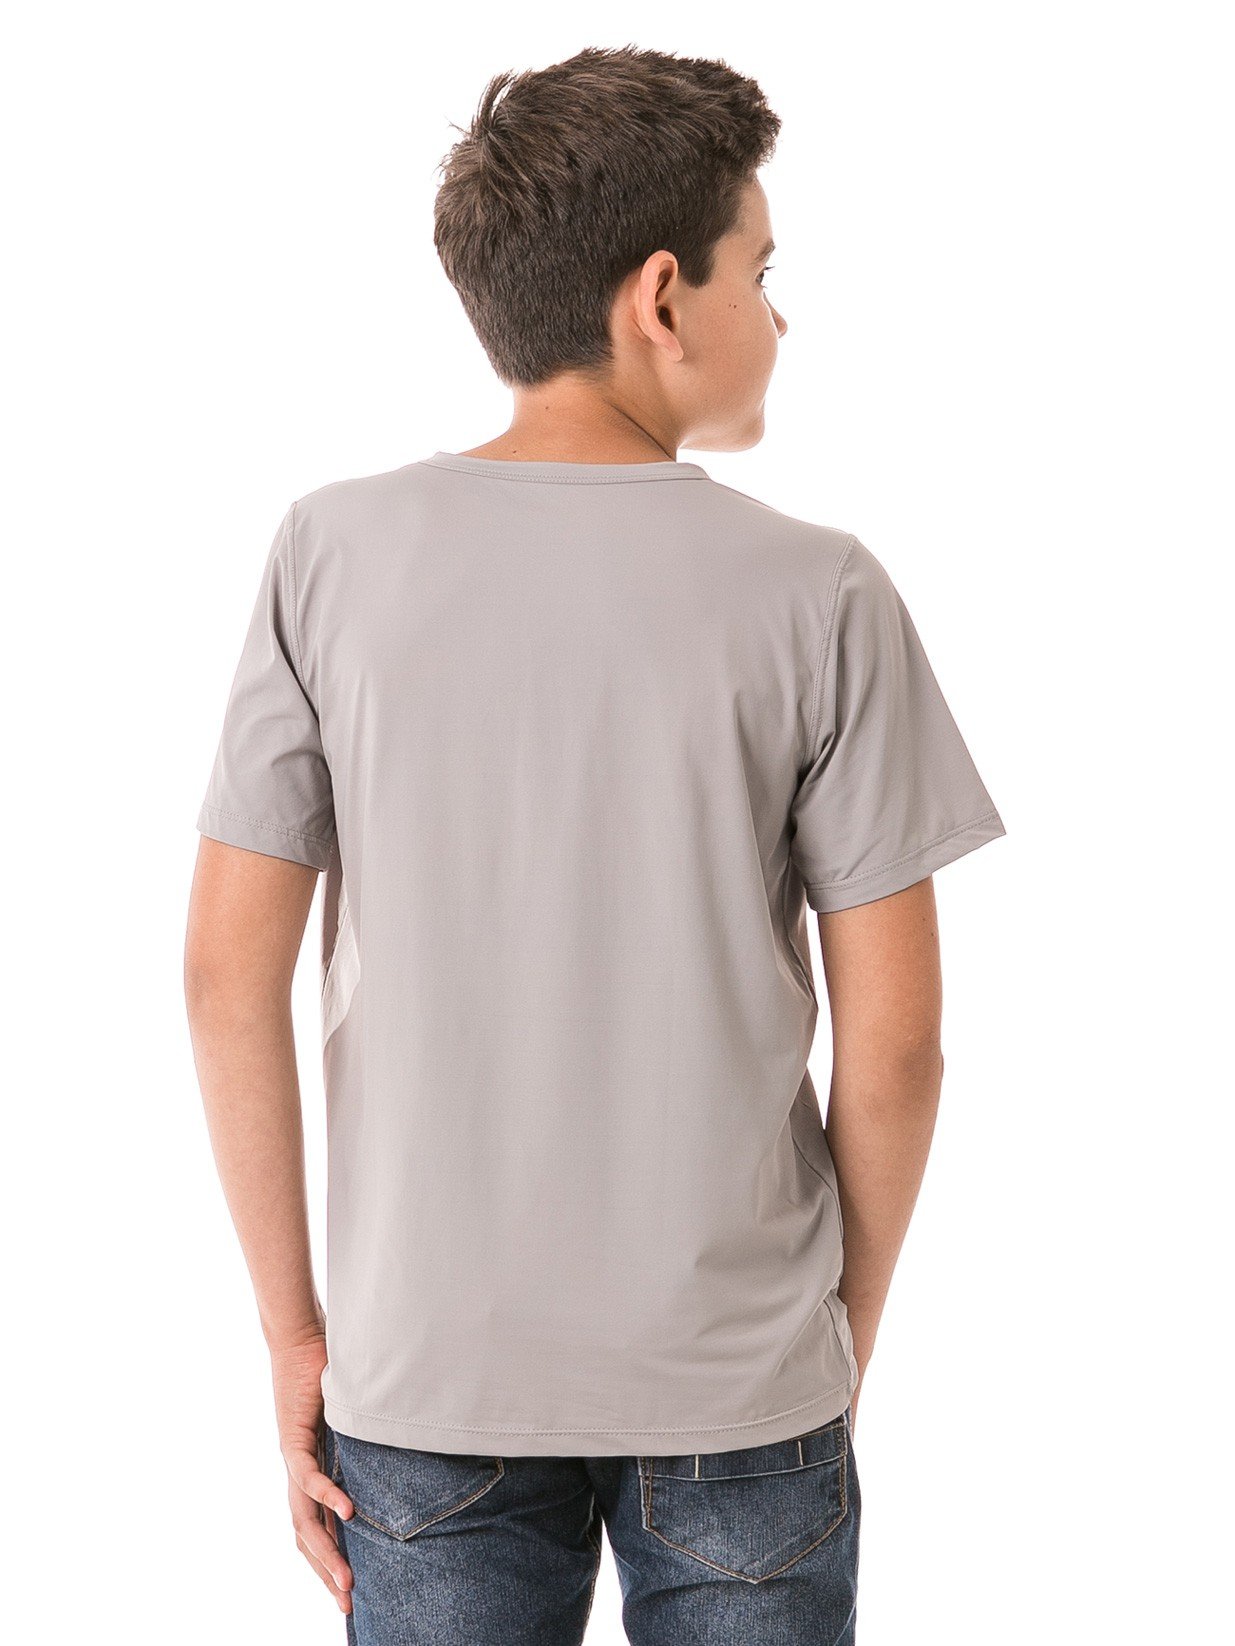 infantil masculinas t shirt curta ice cinza costas b